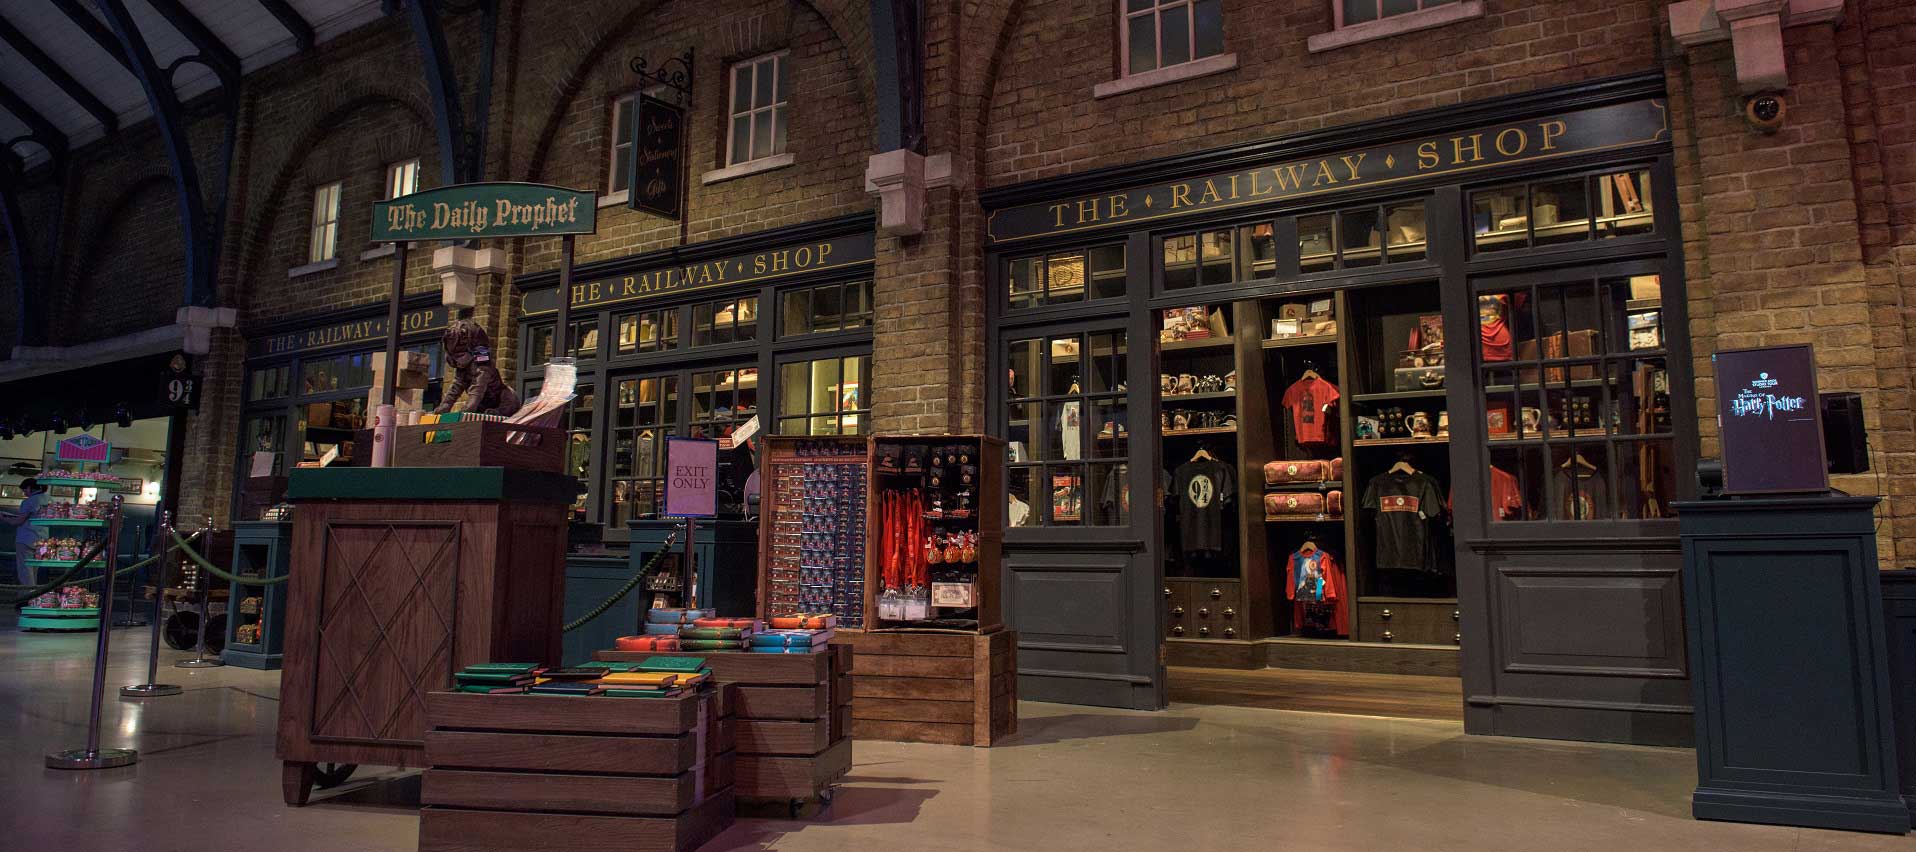 Harry Potter Studios London Gift Shop Walkthrough With Merch Prices 